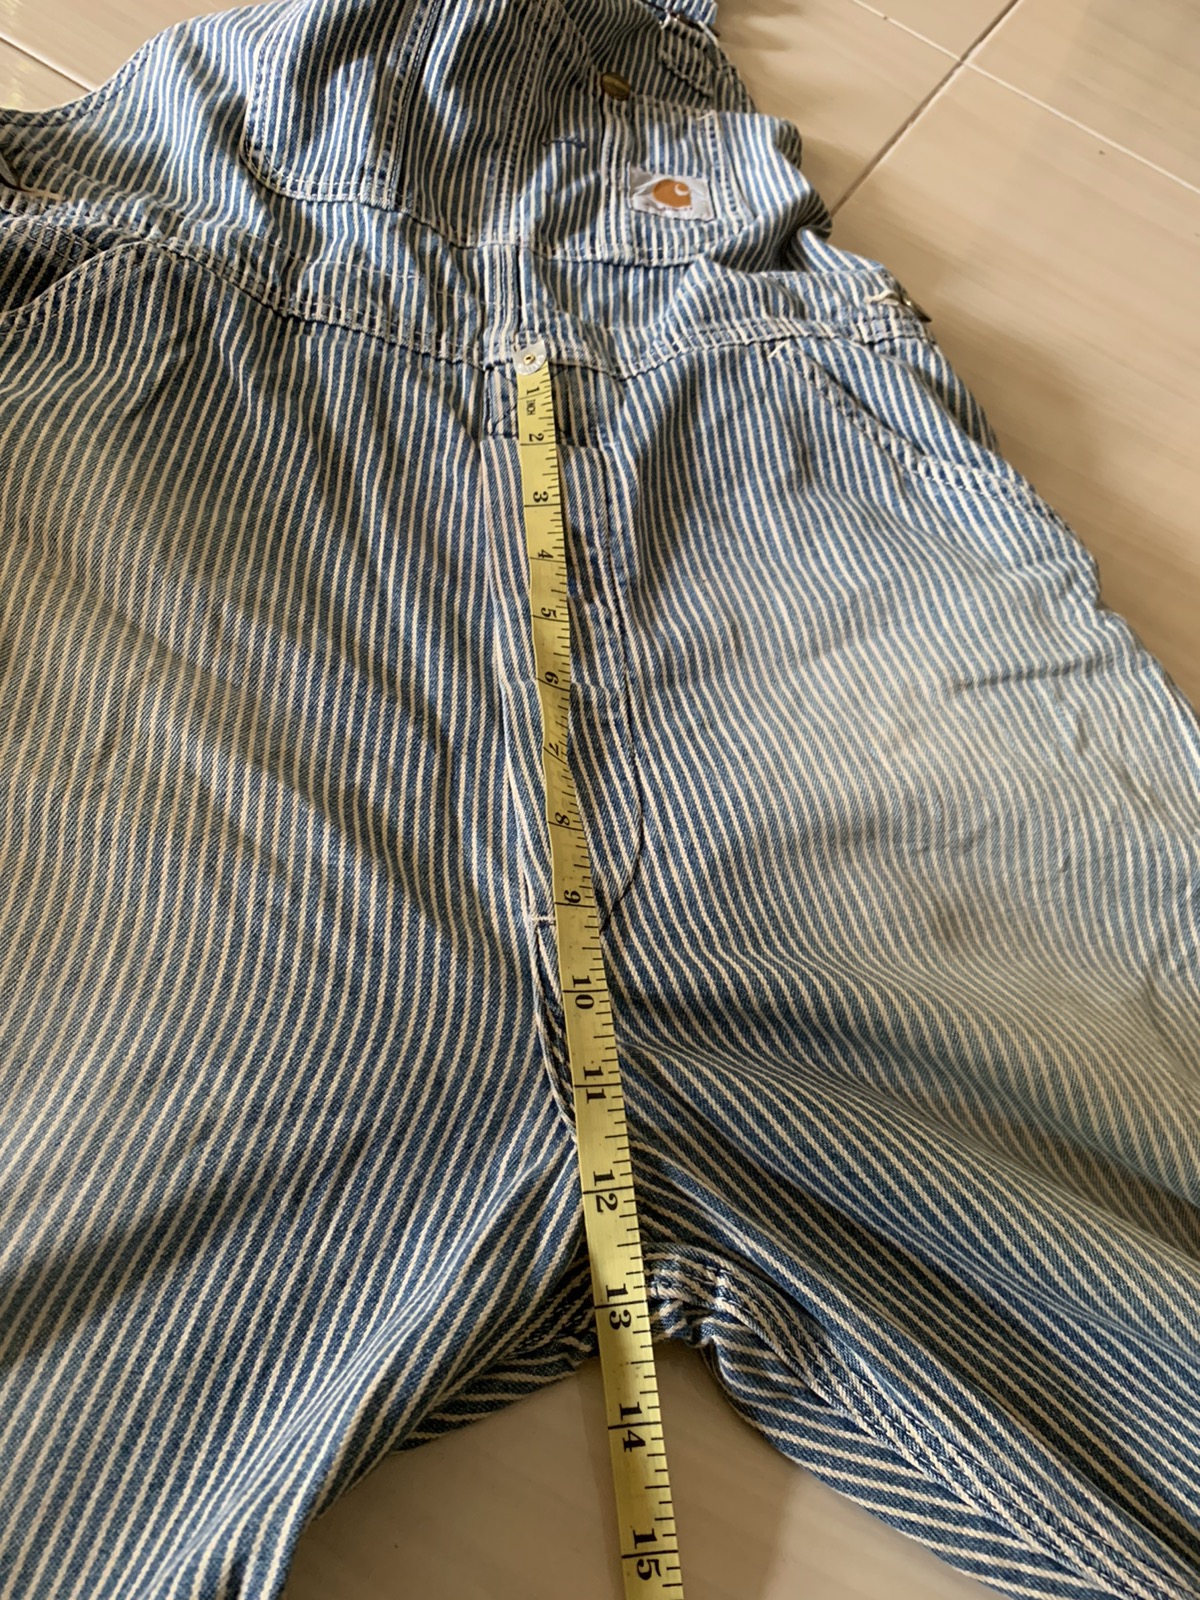 Vintage - RARE 💥 carhatt overalls nice design - 17